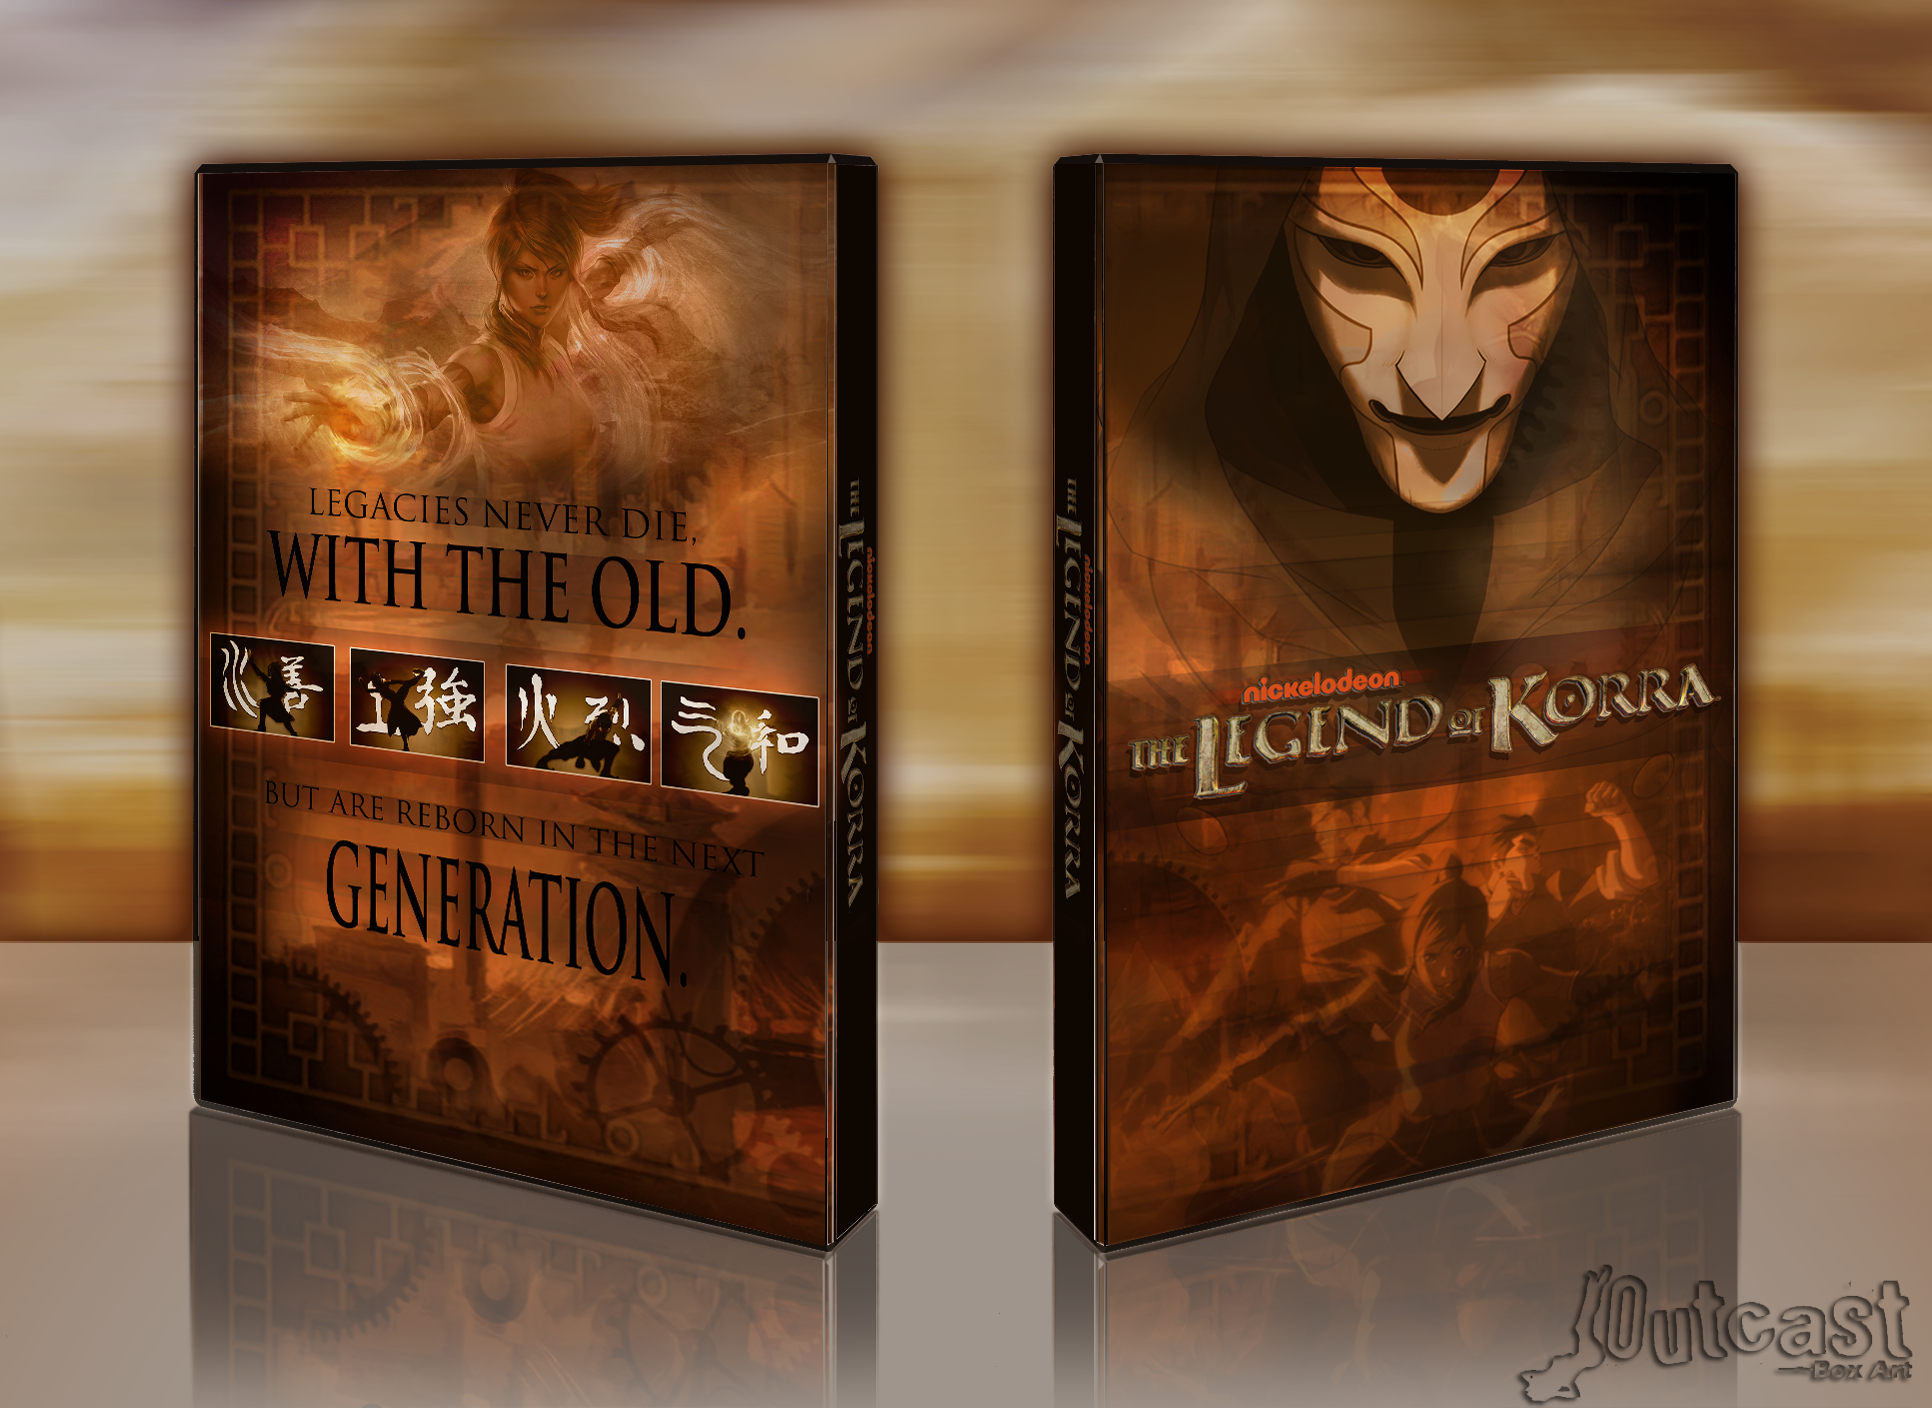 The Legend Of Korra box cover